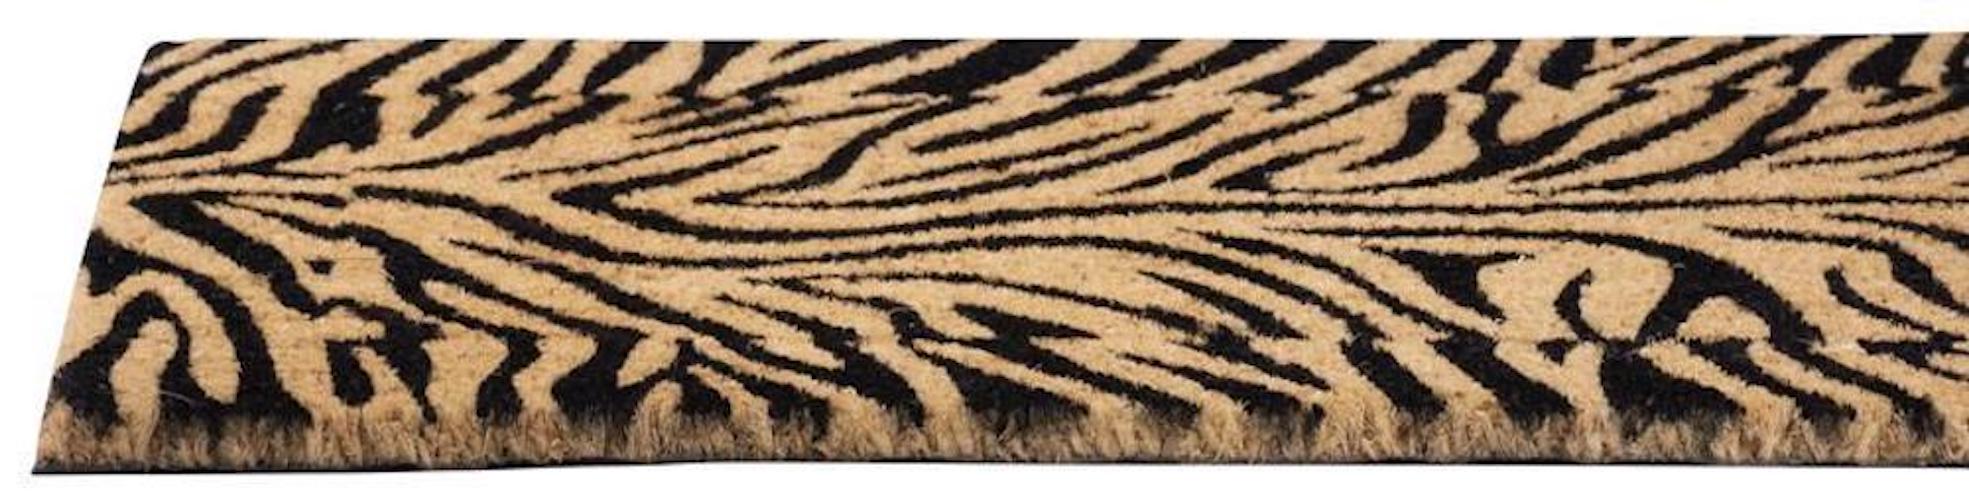 PROREGAL Fußmatte, Schmutzfangmatte ST263, 40x60cm, Zebra